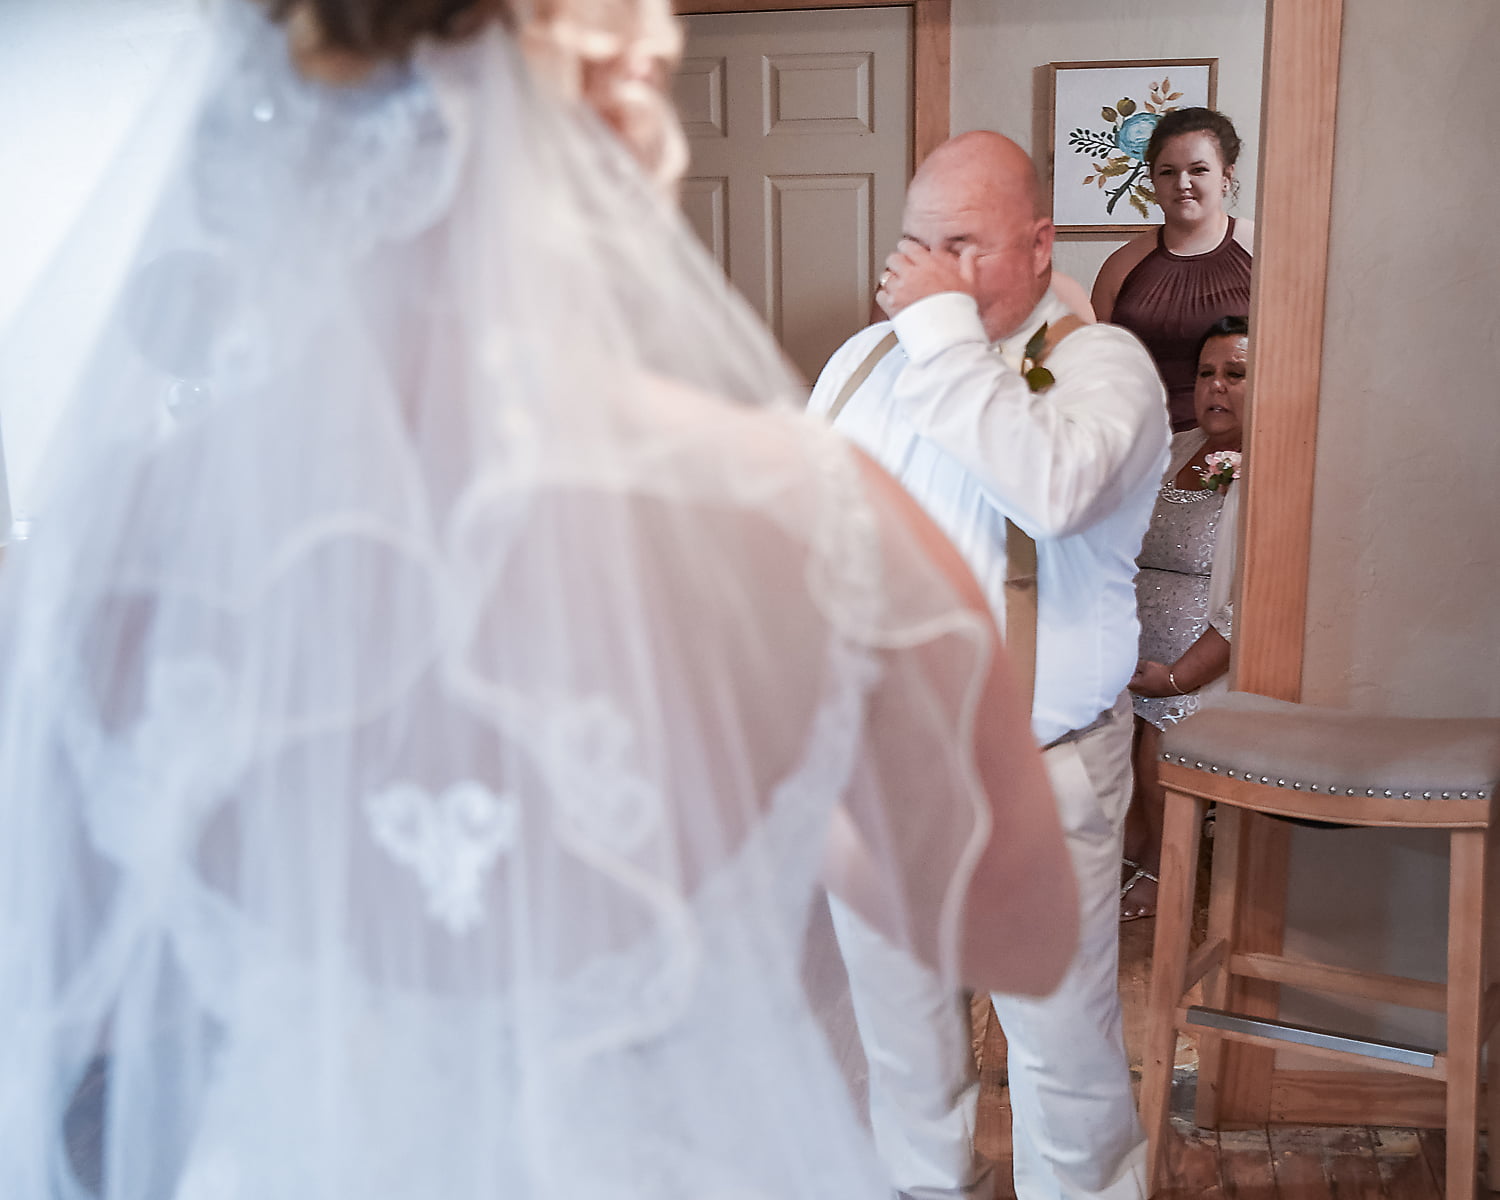 Wedding photo taken by Lisa Rowland Photography in Trenton, Florida